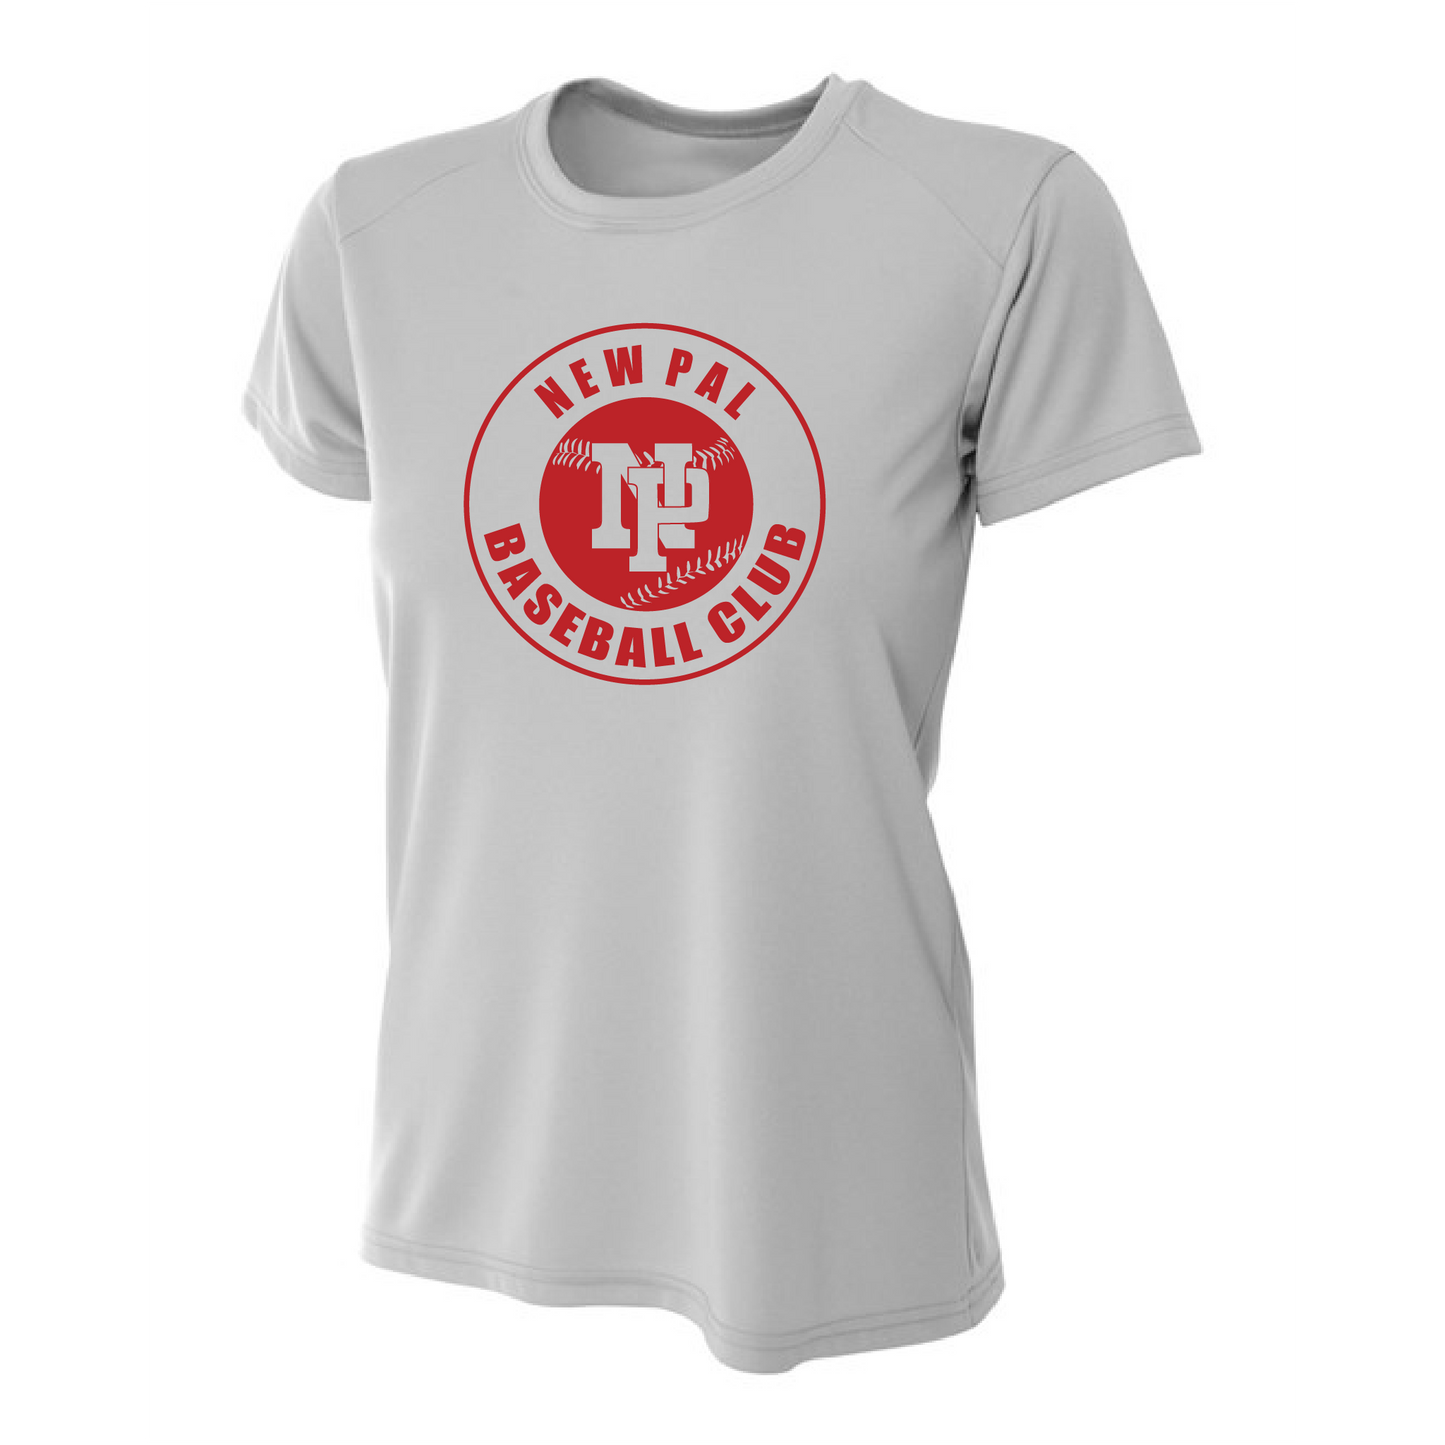 Womens Short Sleeve T-Shirt - NP Baseball Club (red logo)